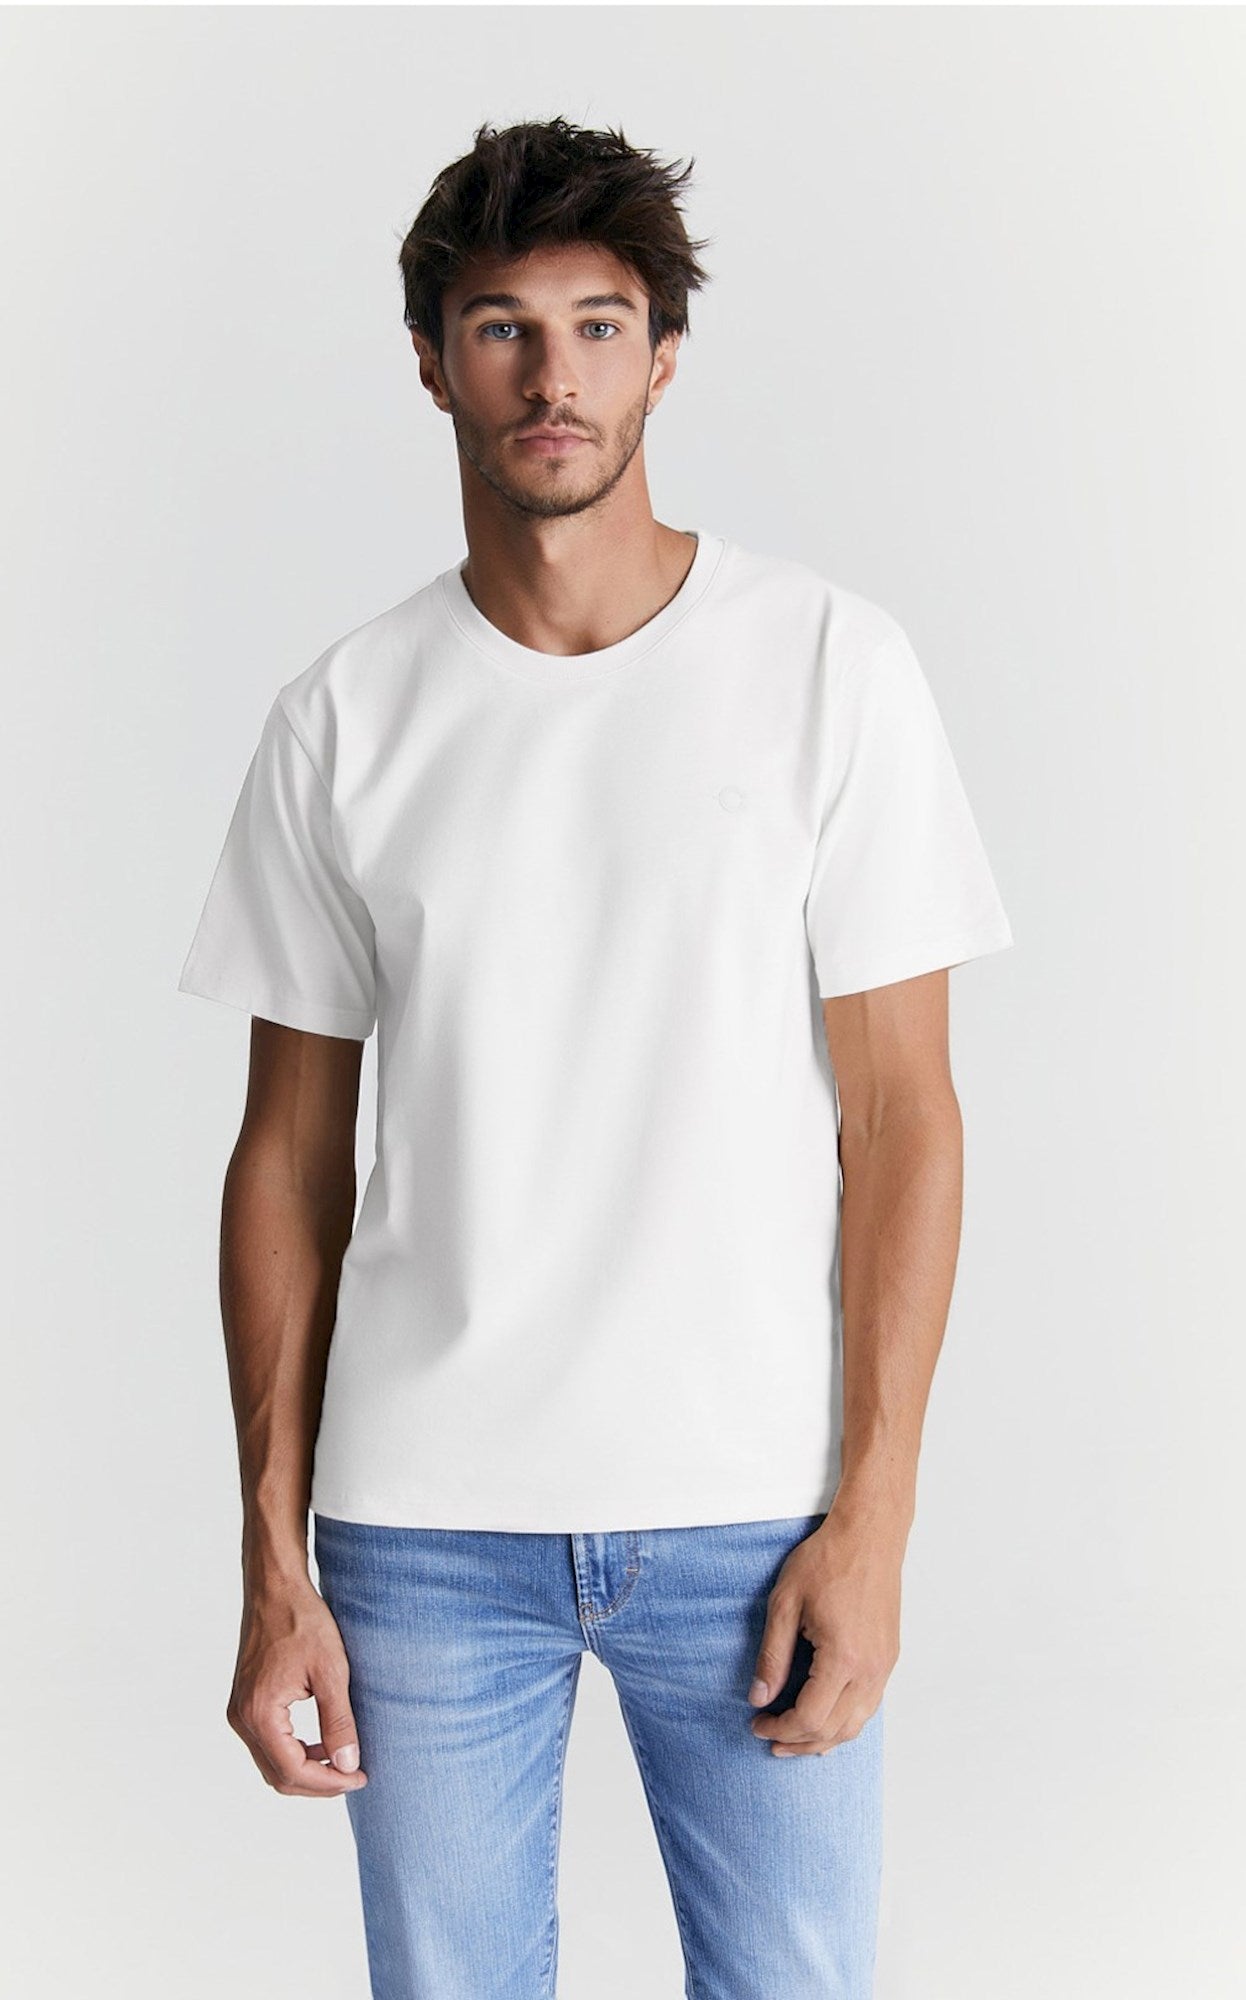 Fin - T Shirt - White